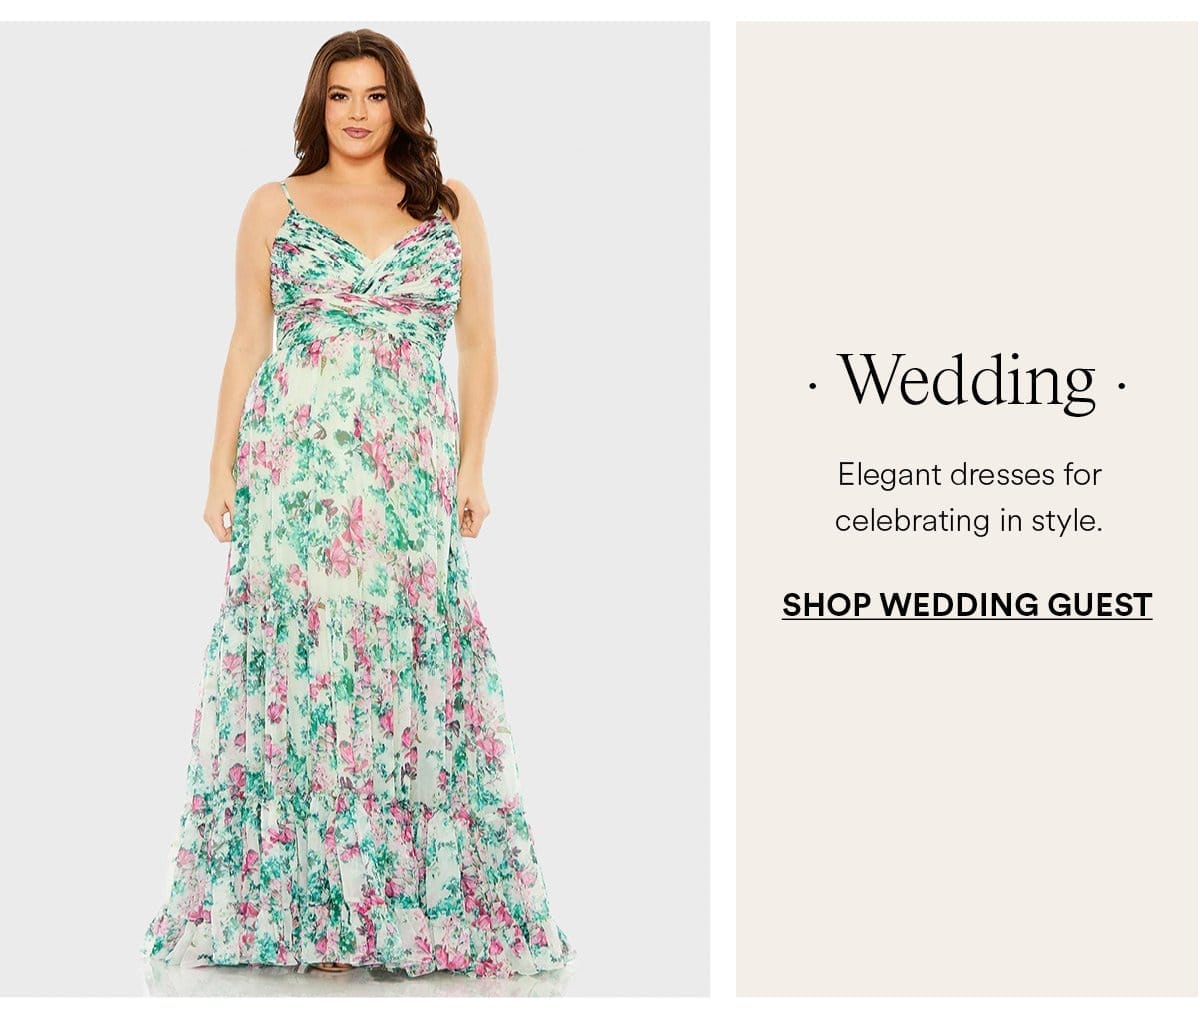 Wedding. Elegant dresses for celebrating in style. Shop Wedding Guest